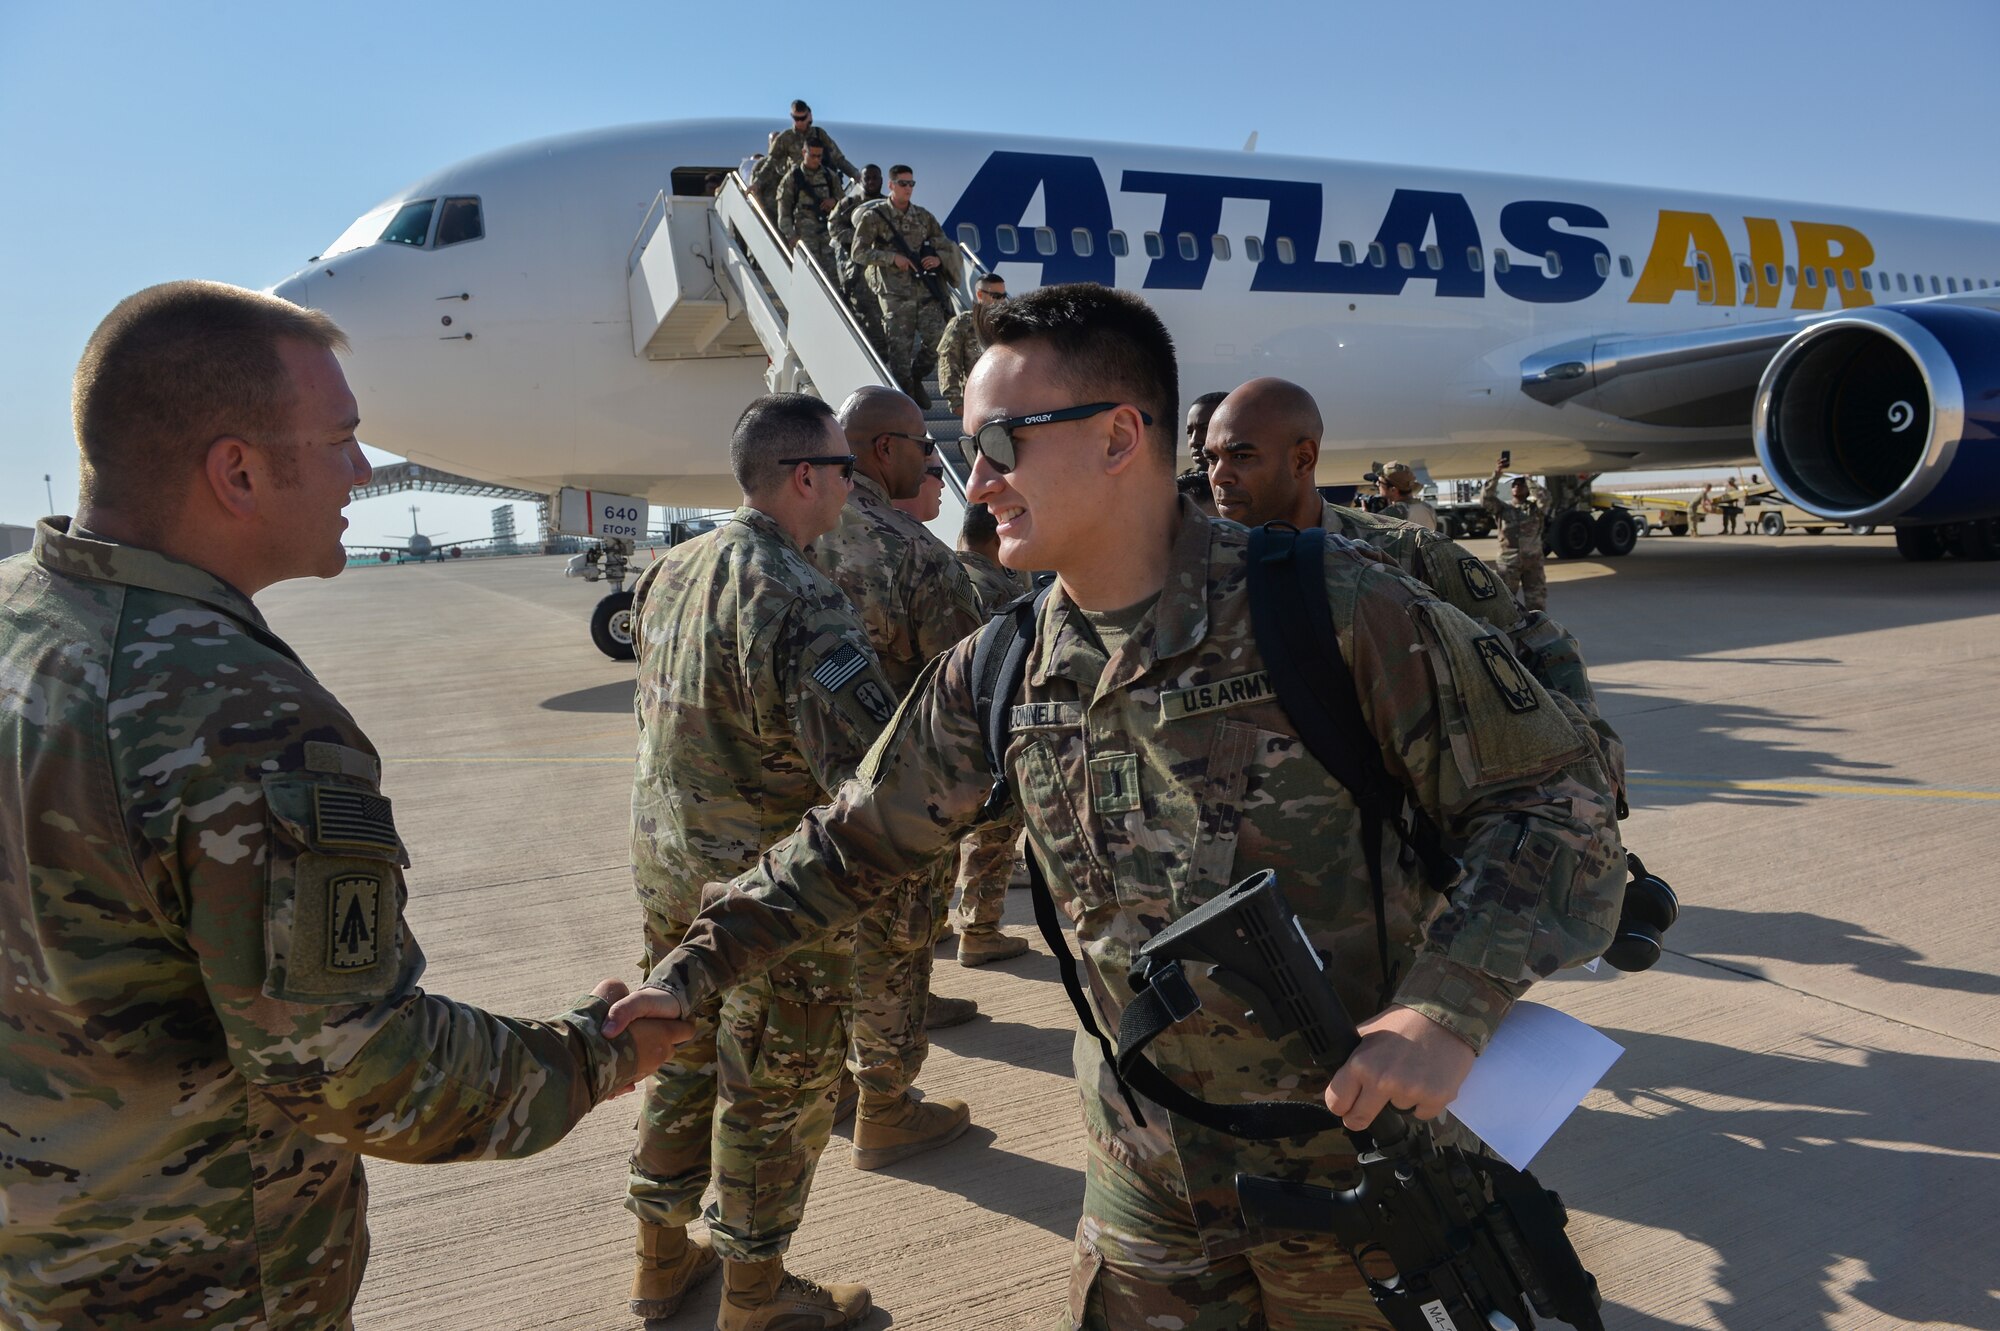 U.S. Army Soldiers with 4-5 Air Defense Artillery Battalion, Ft. Hood, Texas, arrive at Prince Sultan Air Base (PSAB), Kingdom of Saudi Arabia (KSA), October 21, 2019.